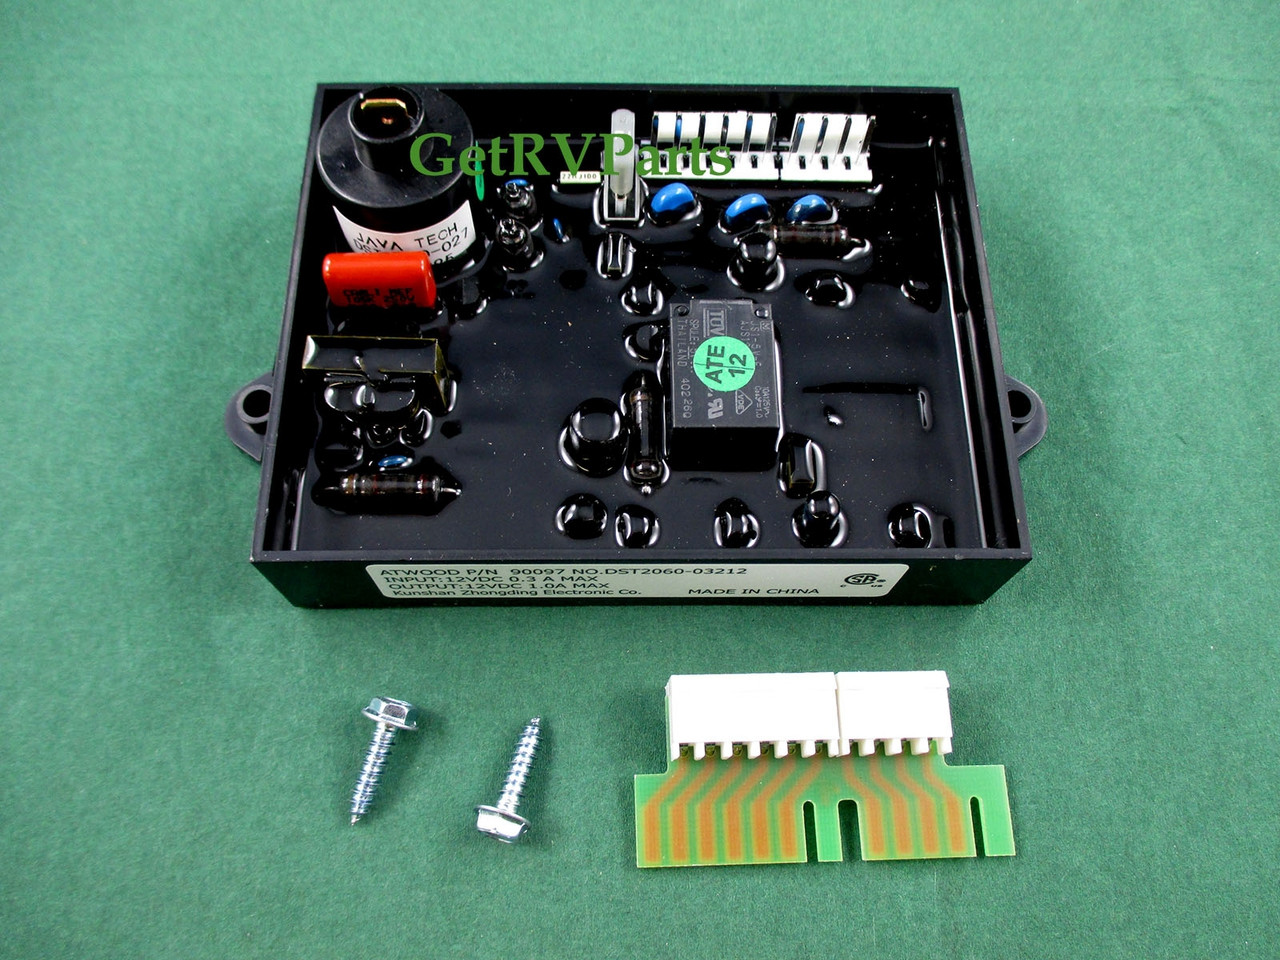 GCH6A-7E 93253 Atwood RV Water Heater PC Circuit Control Board GCH6A-8E 93865 GCH6-7E New part fits GCH6-4E GCH6-6E 